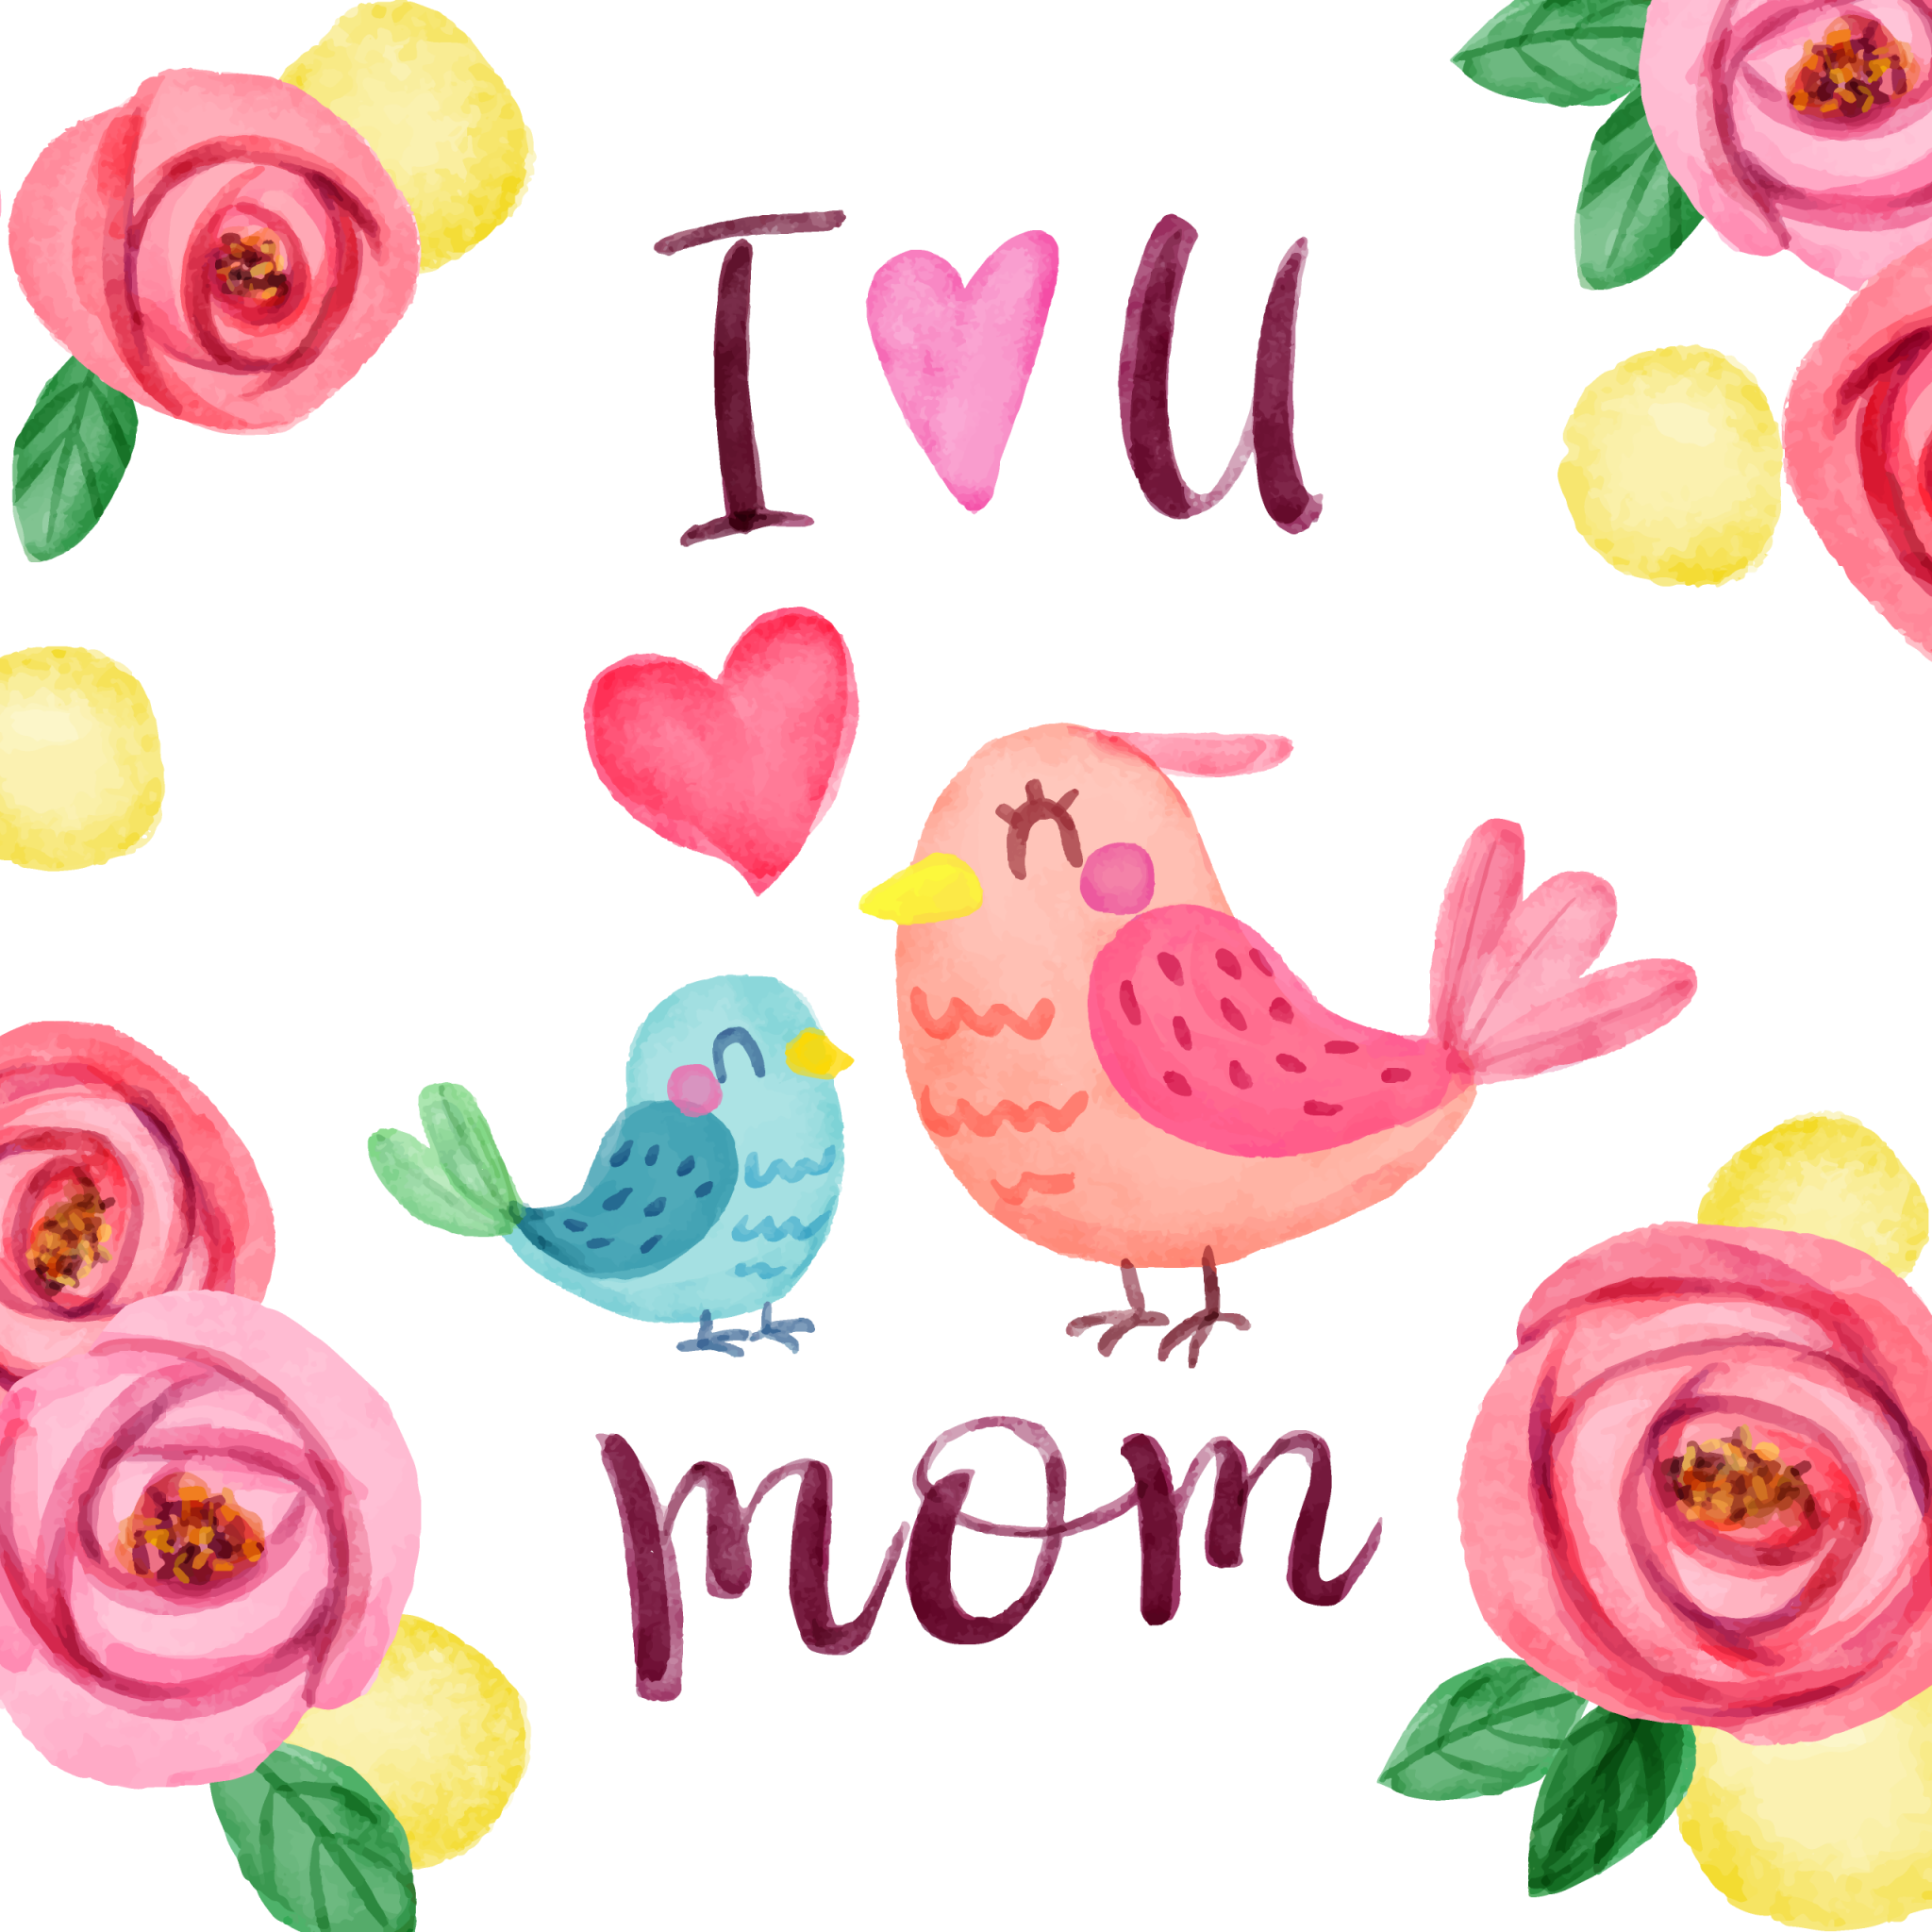 I Love You Mom Wallpaper 4K, Happy Mother's Day, Illustration